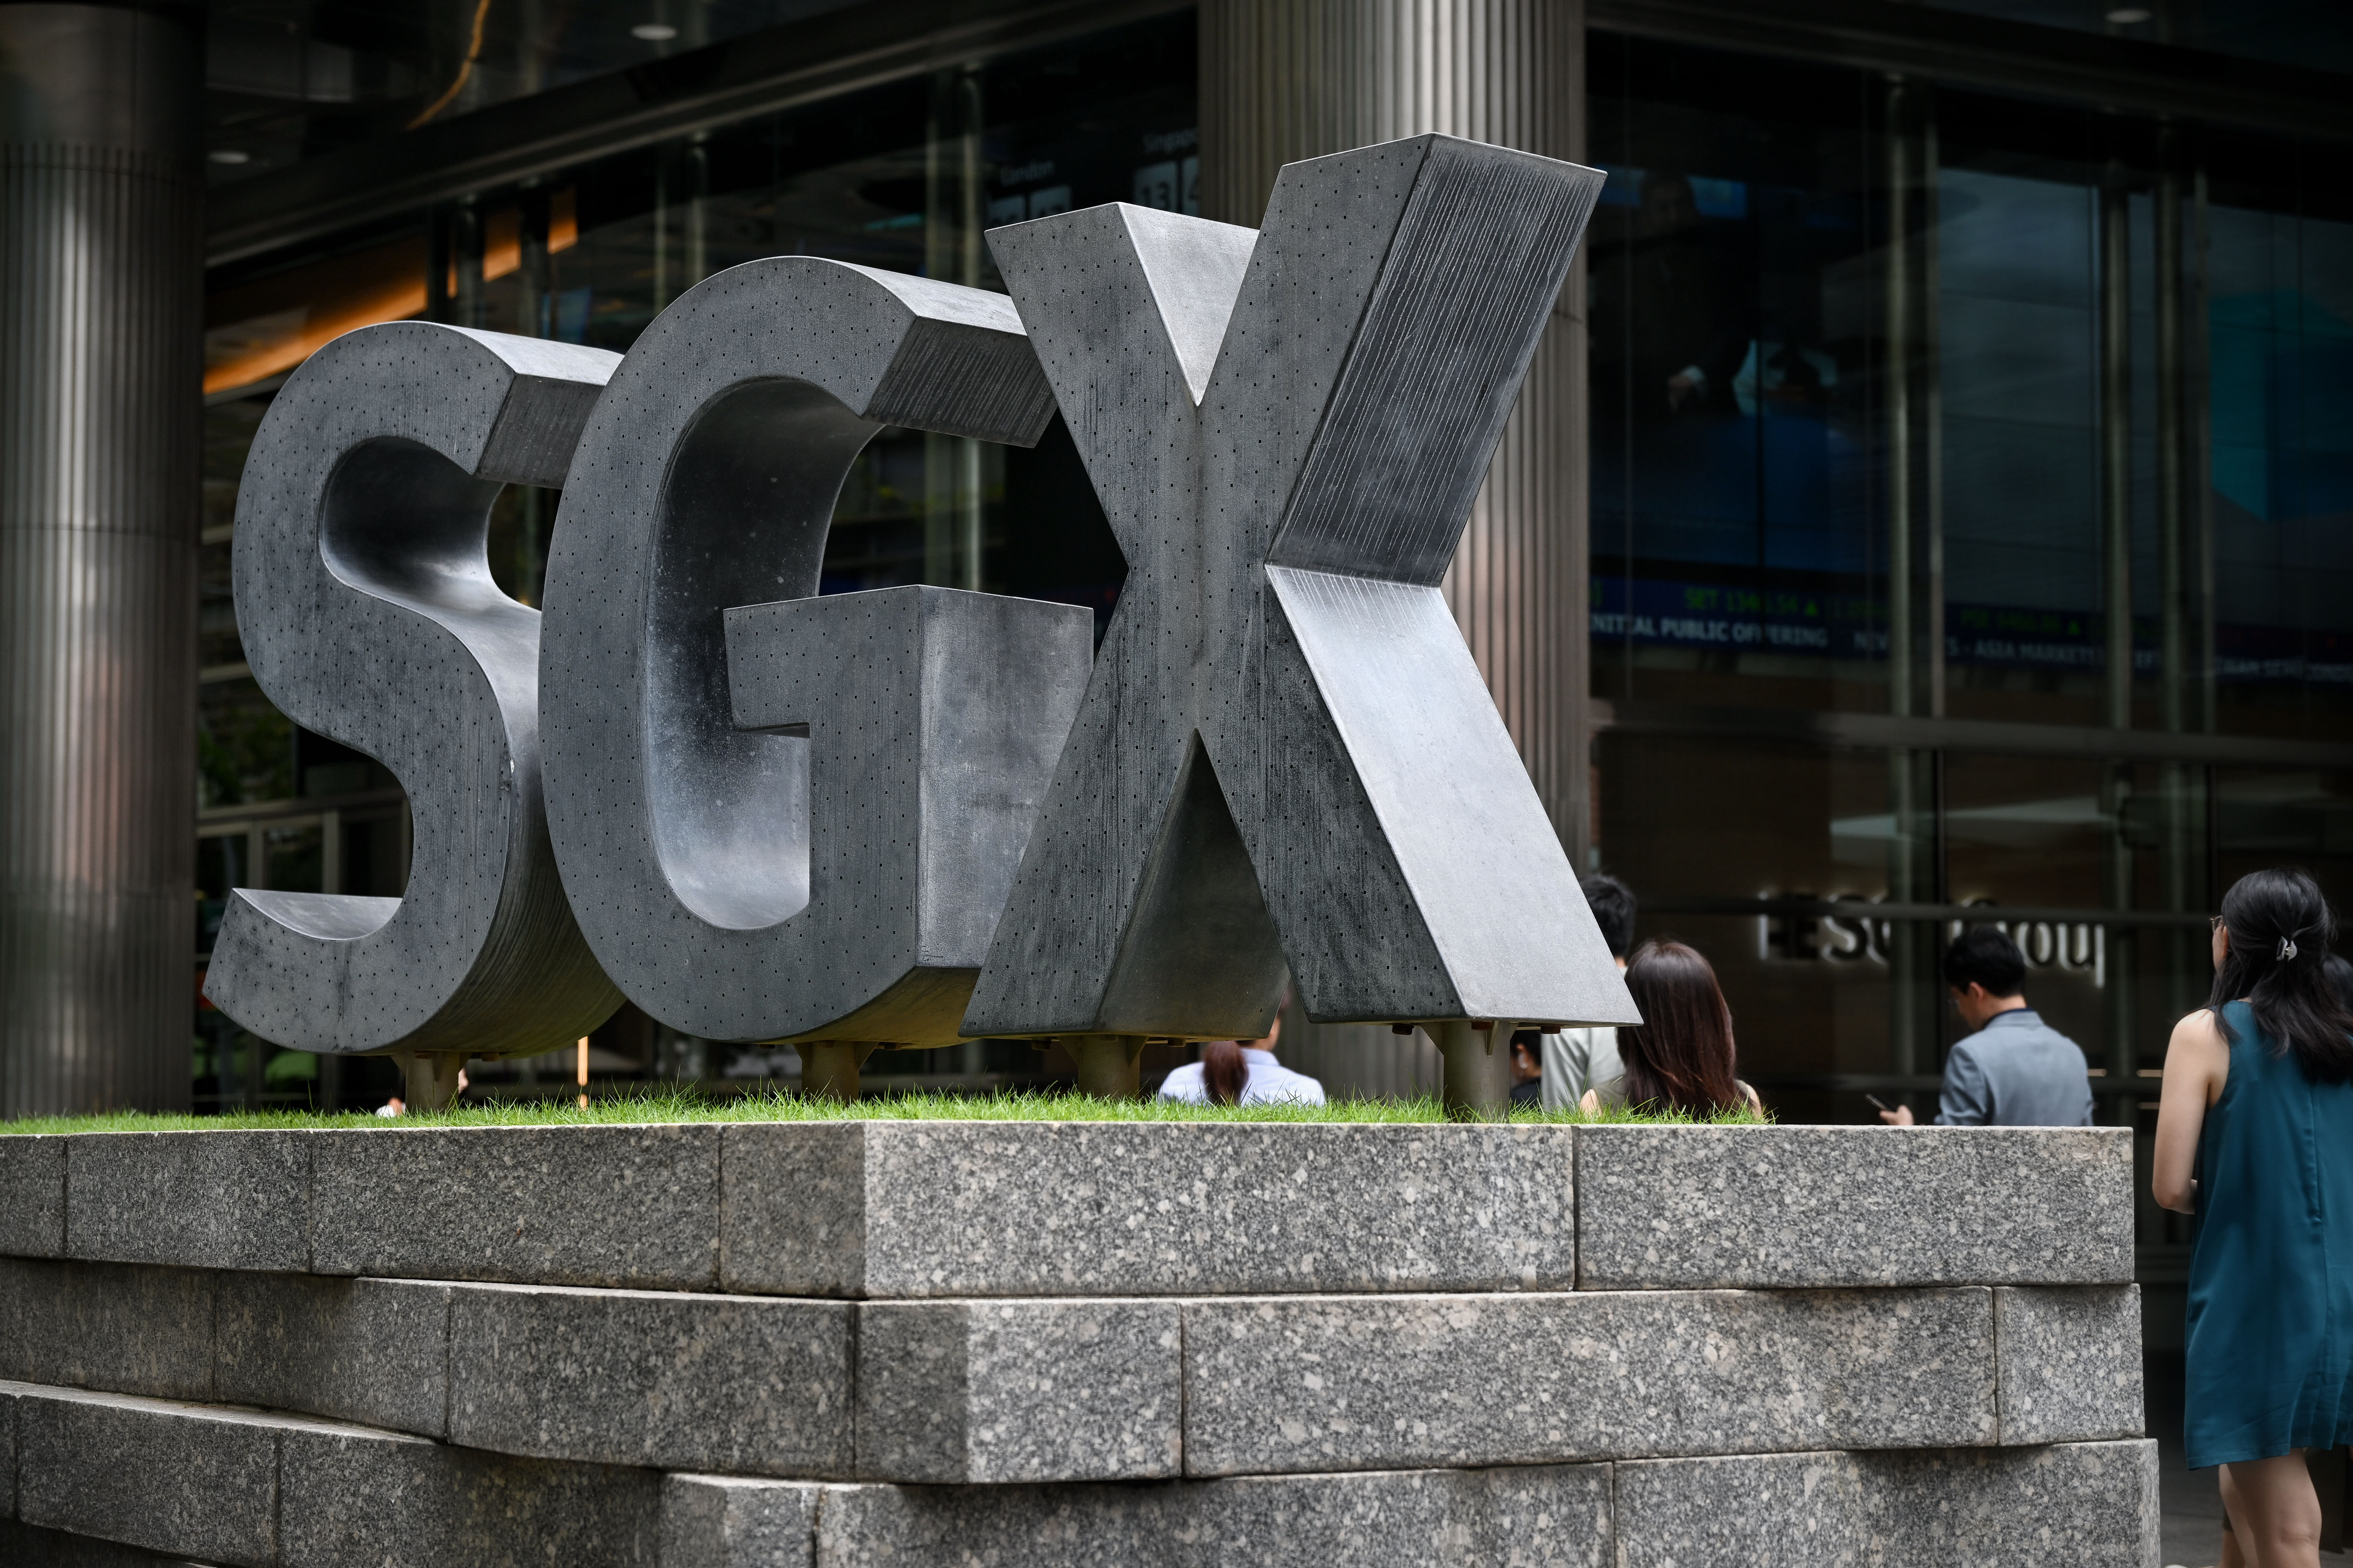 Singapore stocks rise, tracking regional bourses; STI up 0.3%